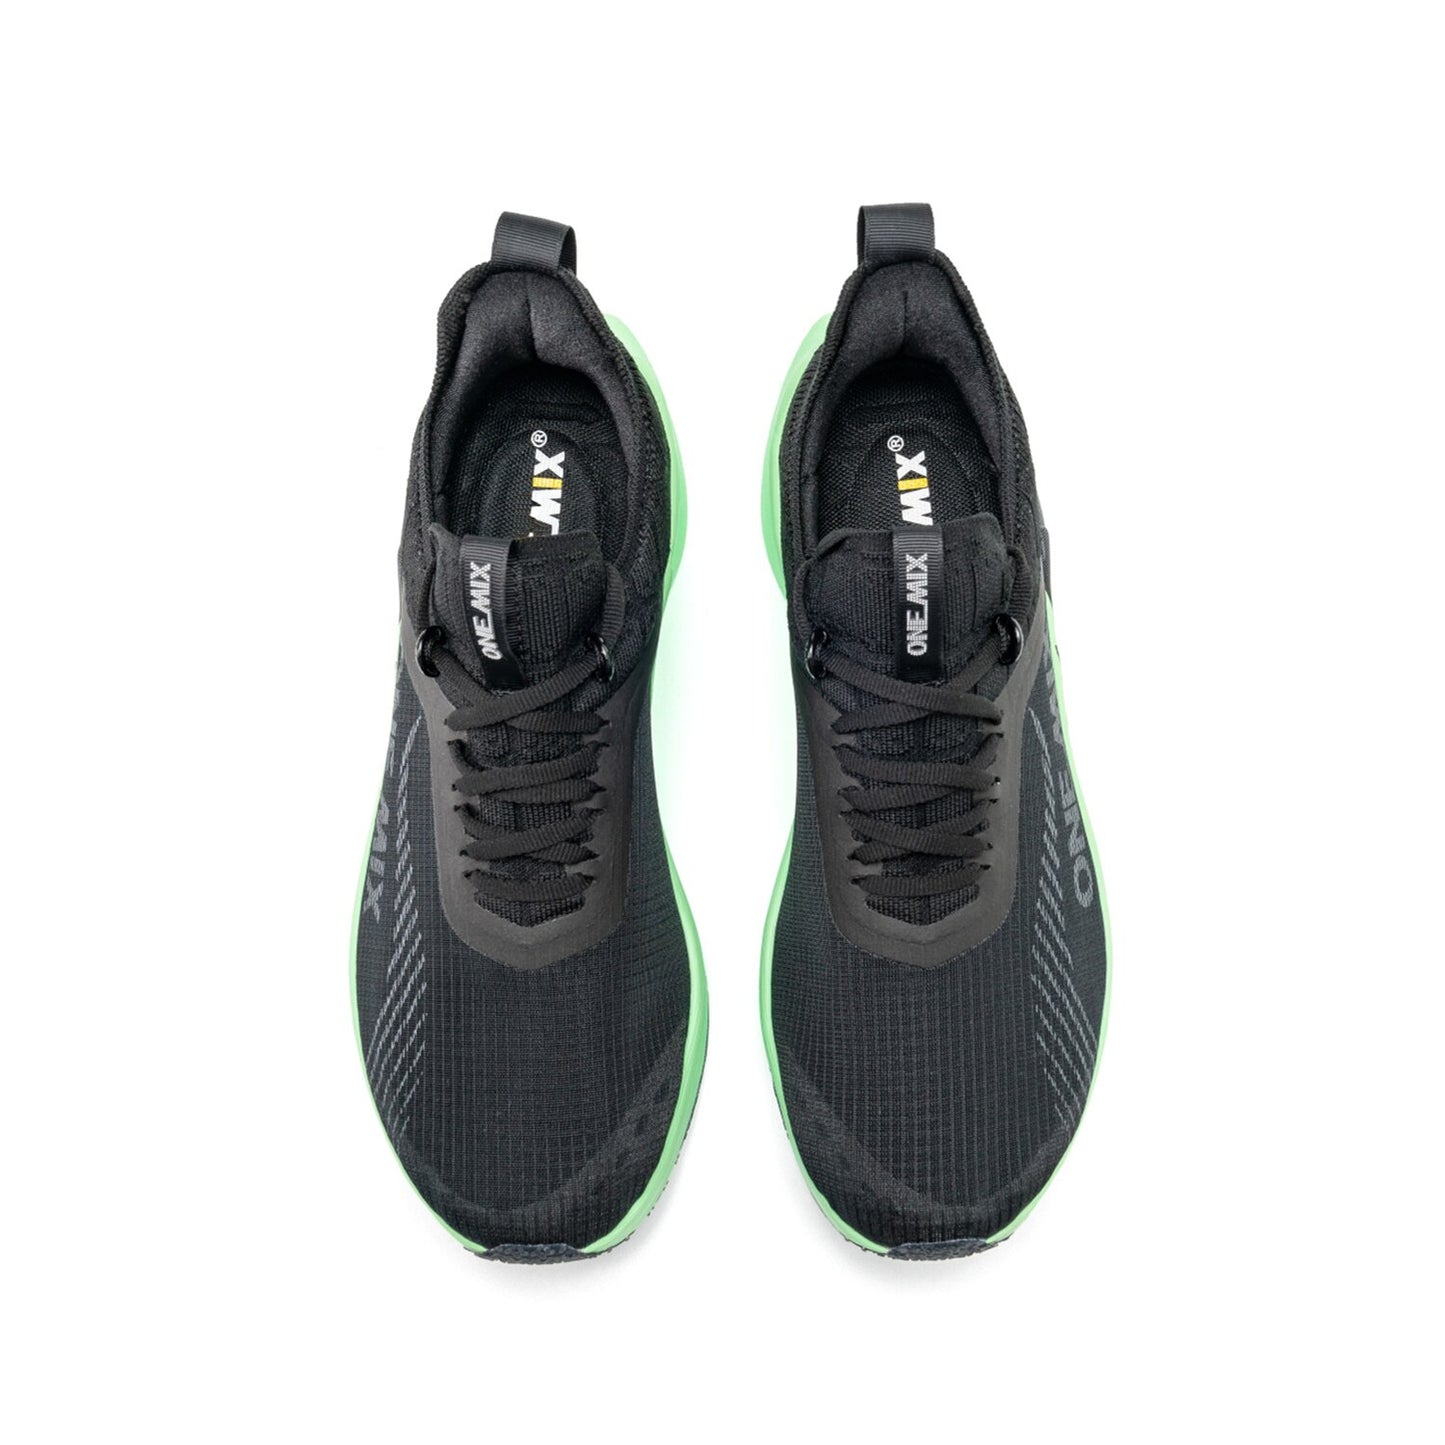 ONEMIX Men Marathon Running Shoes Carbon Fibre Plate Racing Shoes Professional Lightweight Technology Men&#39;s Sneakers For Outdoor